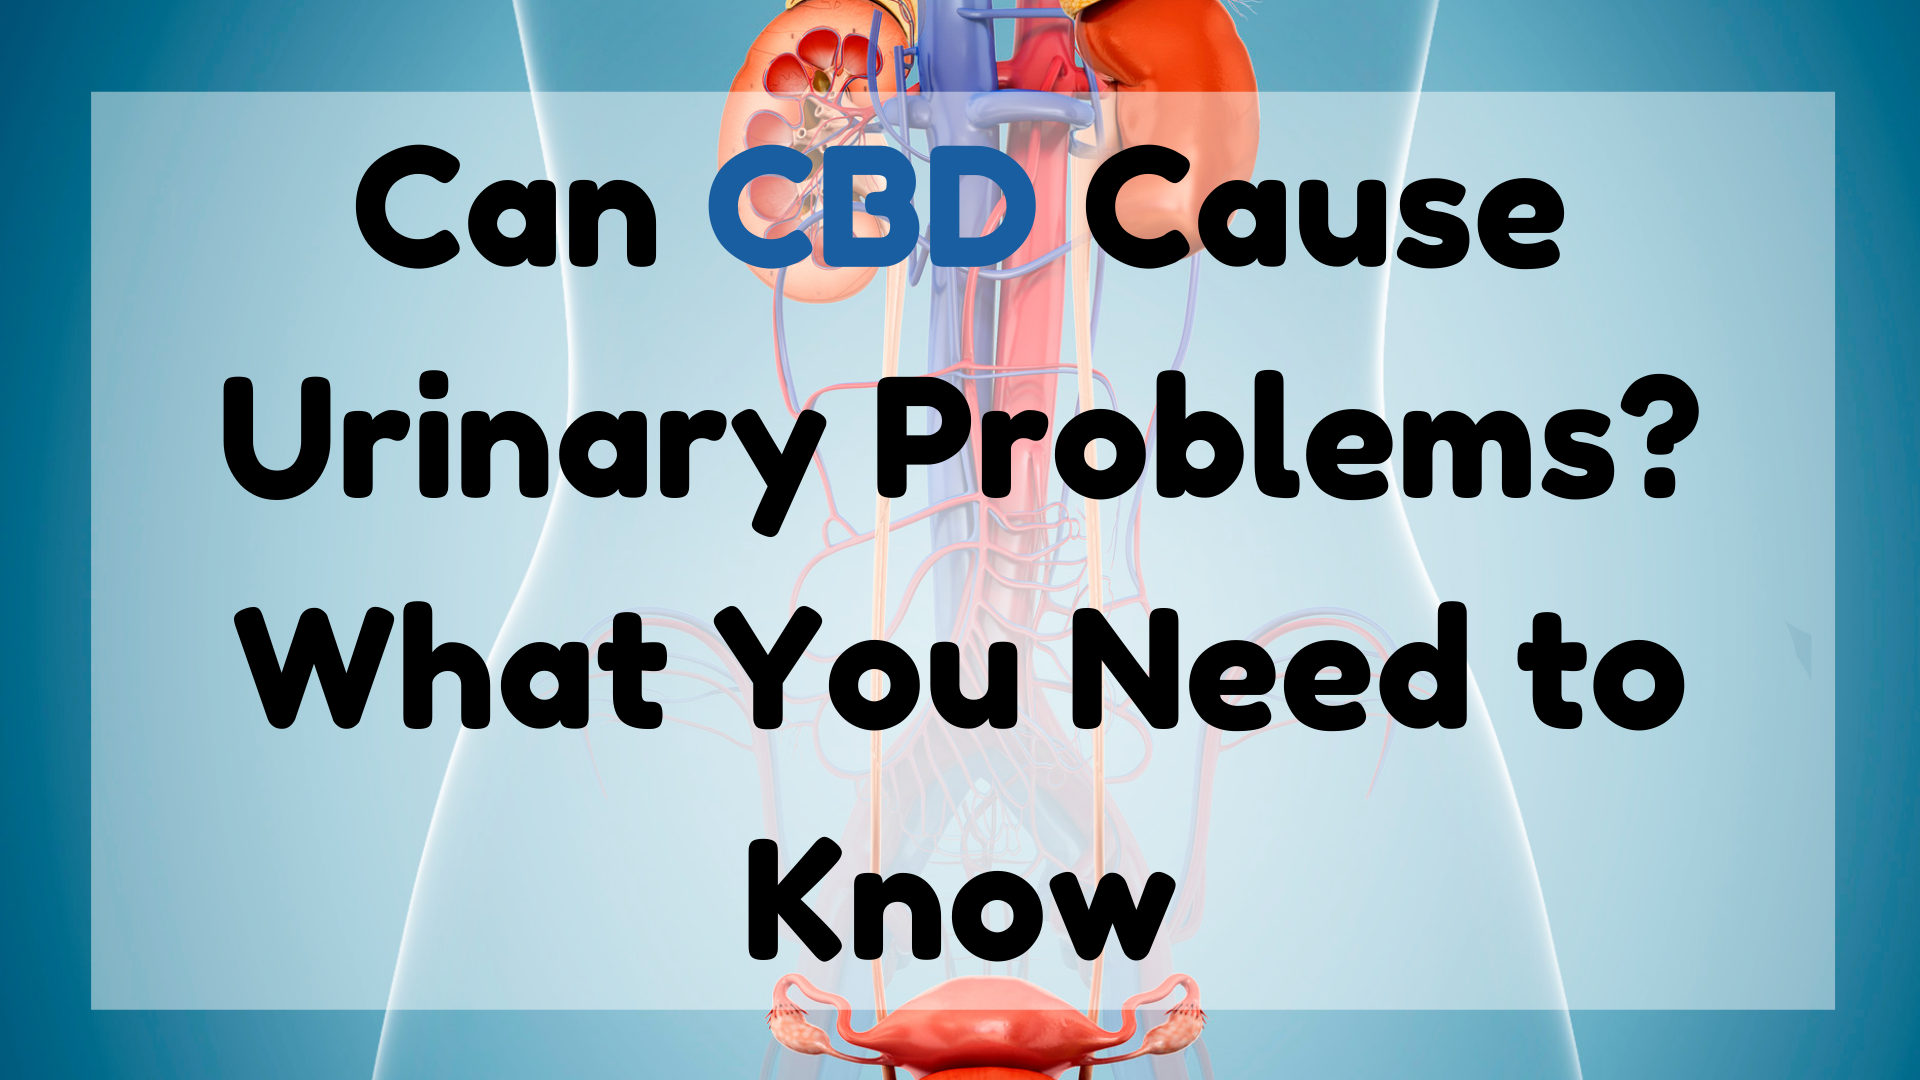 Can CBD Cause Urinary Problems